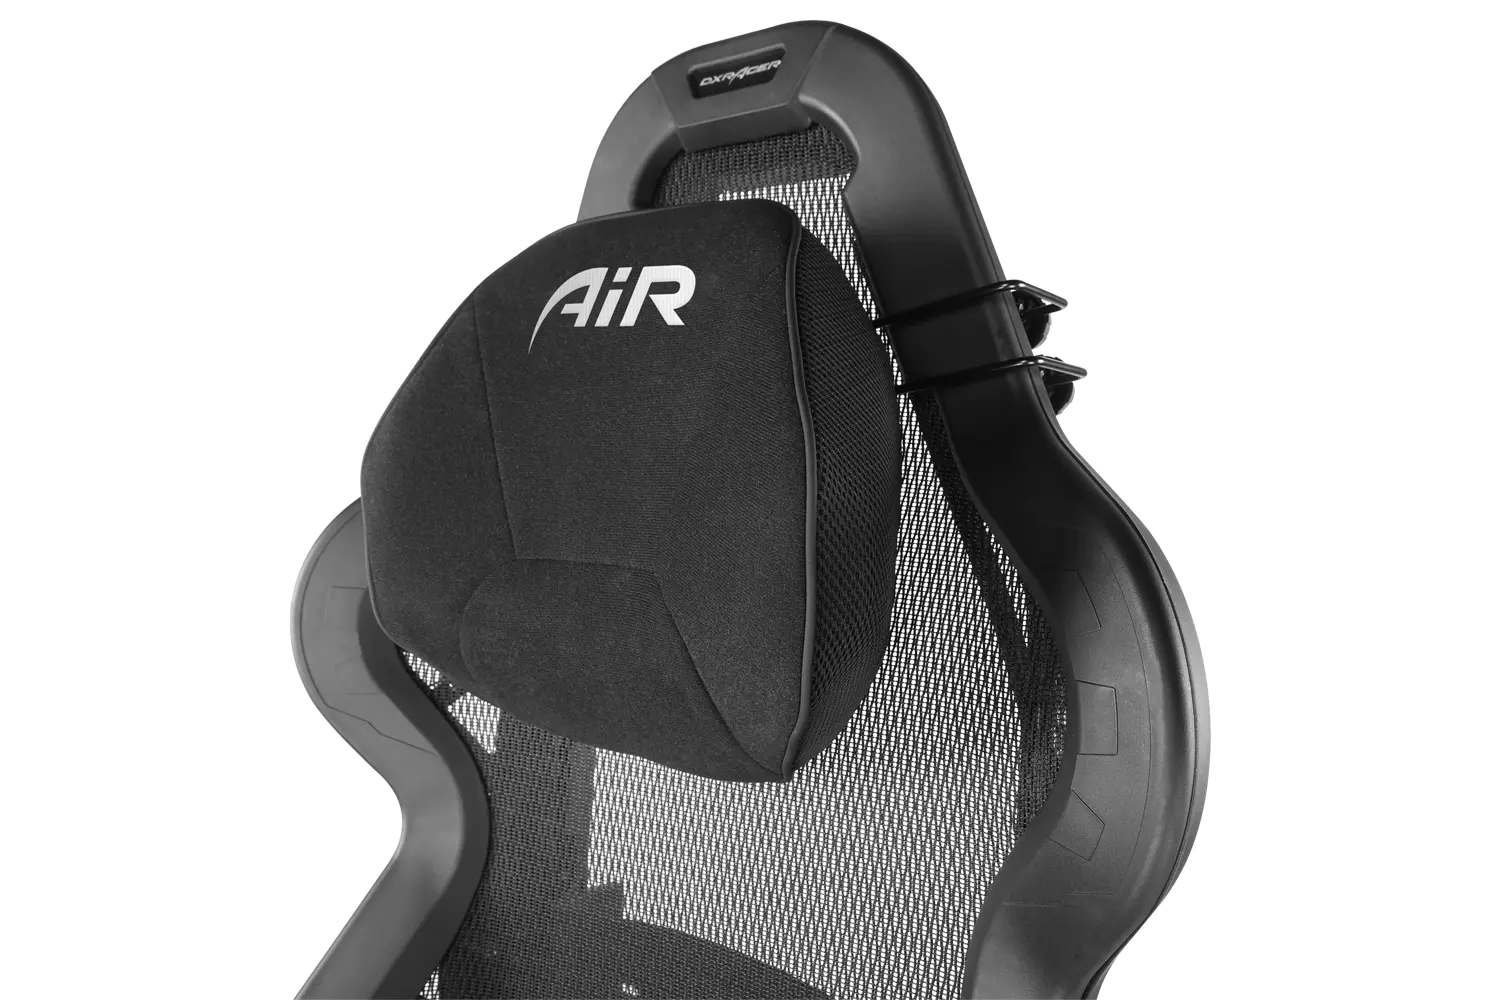 Dx Racer Air headrest